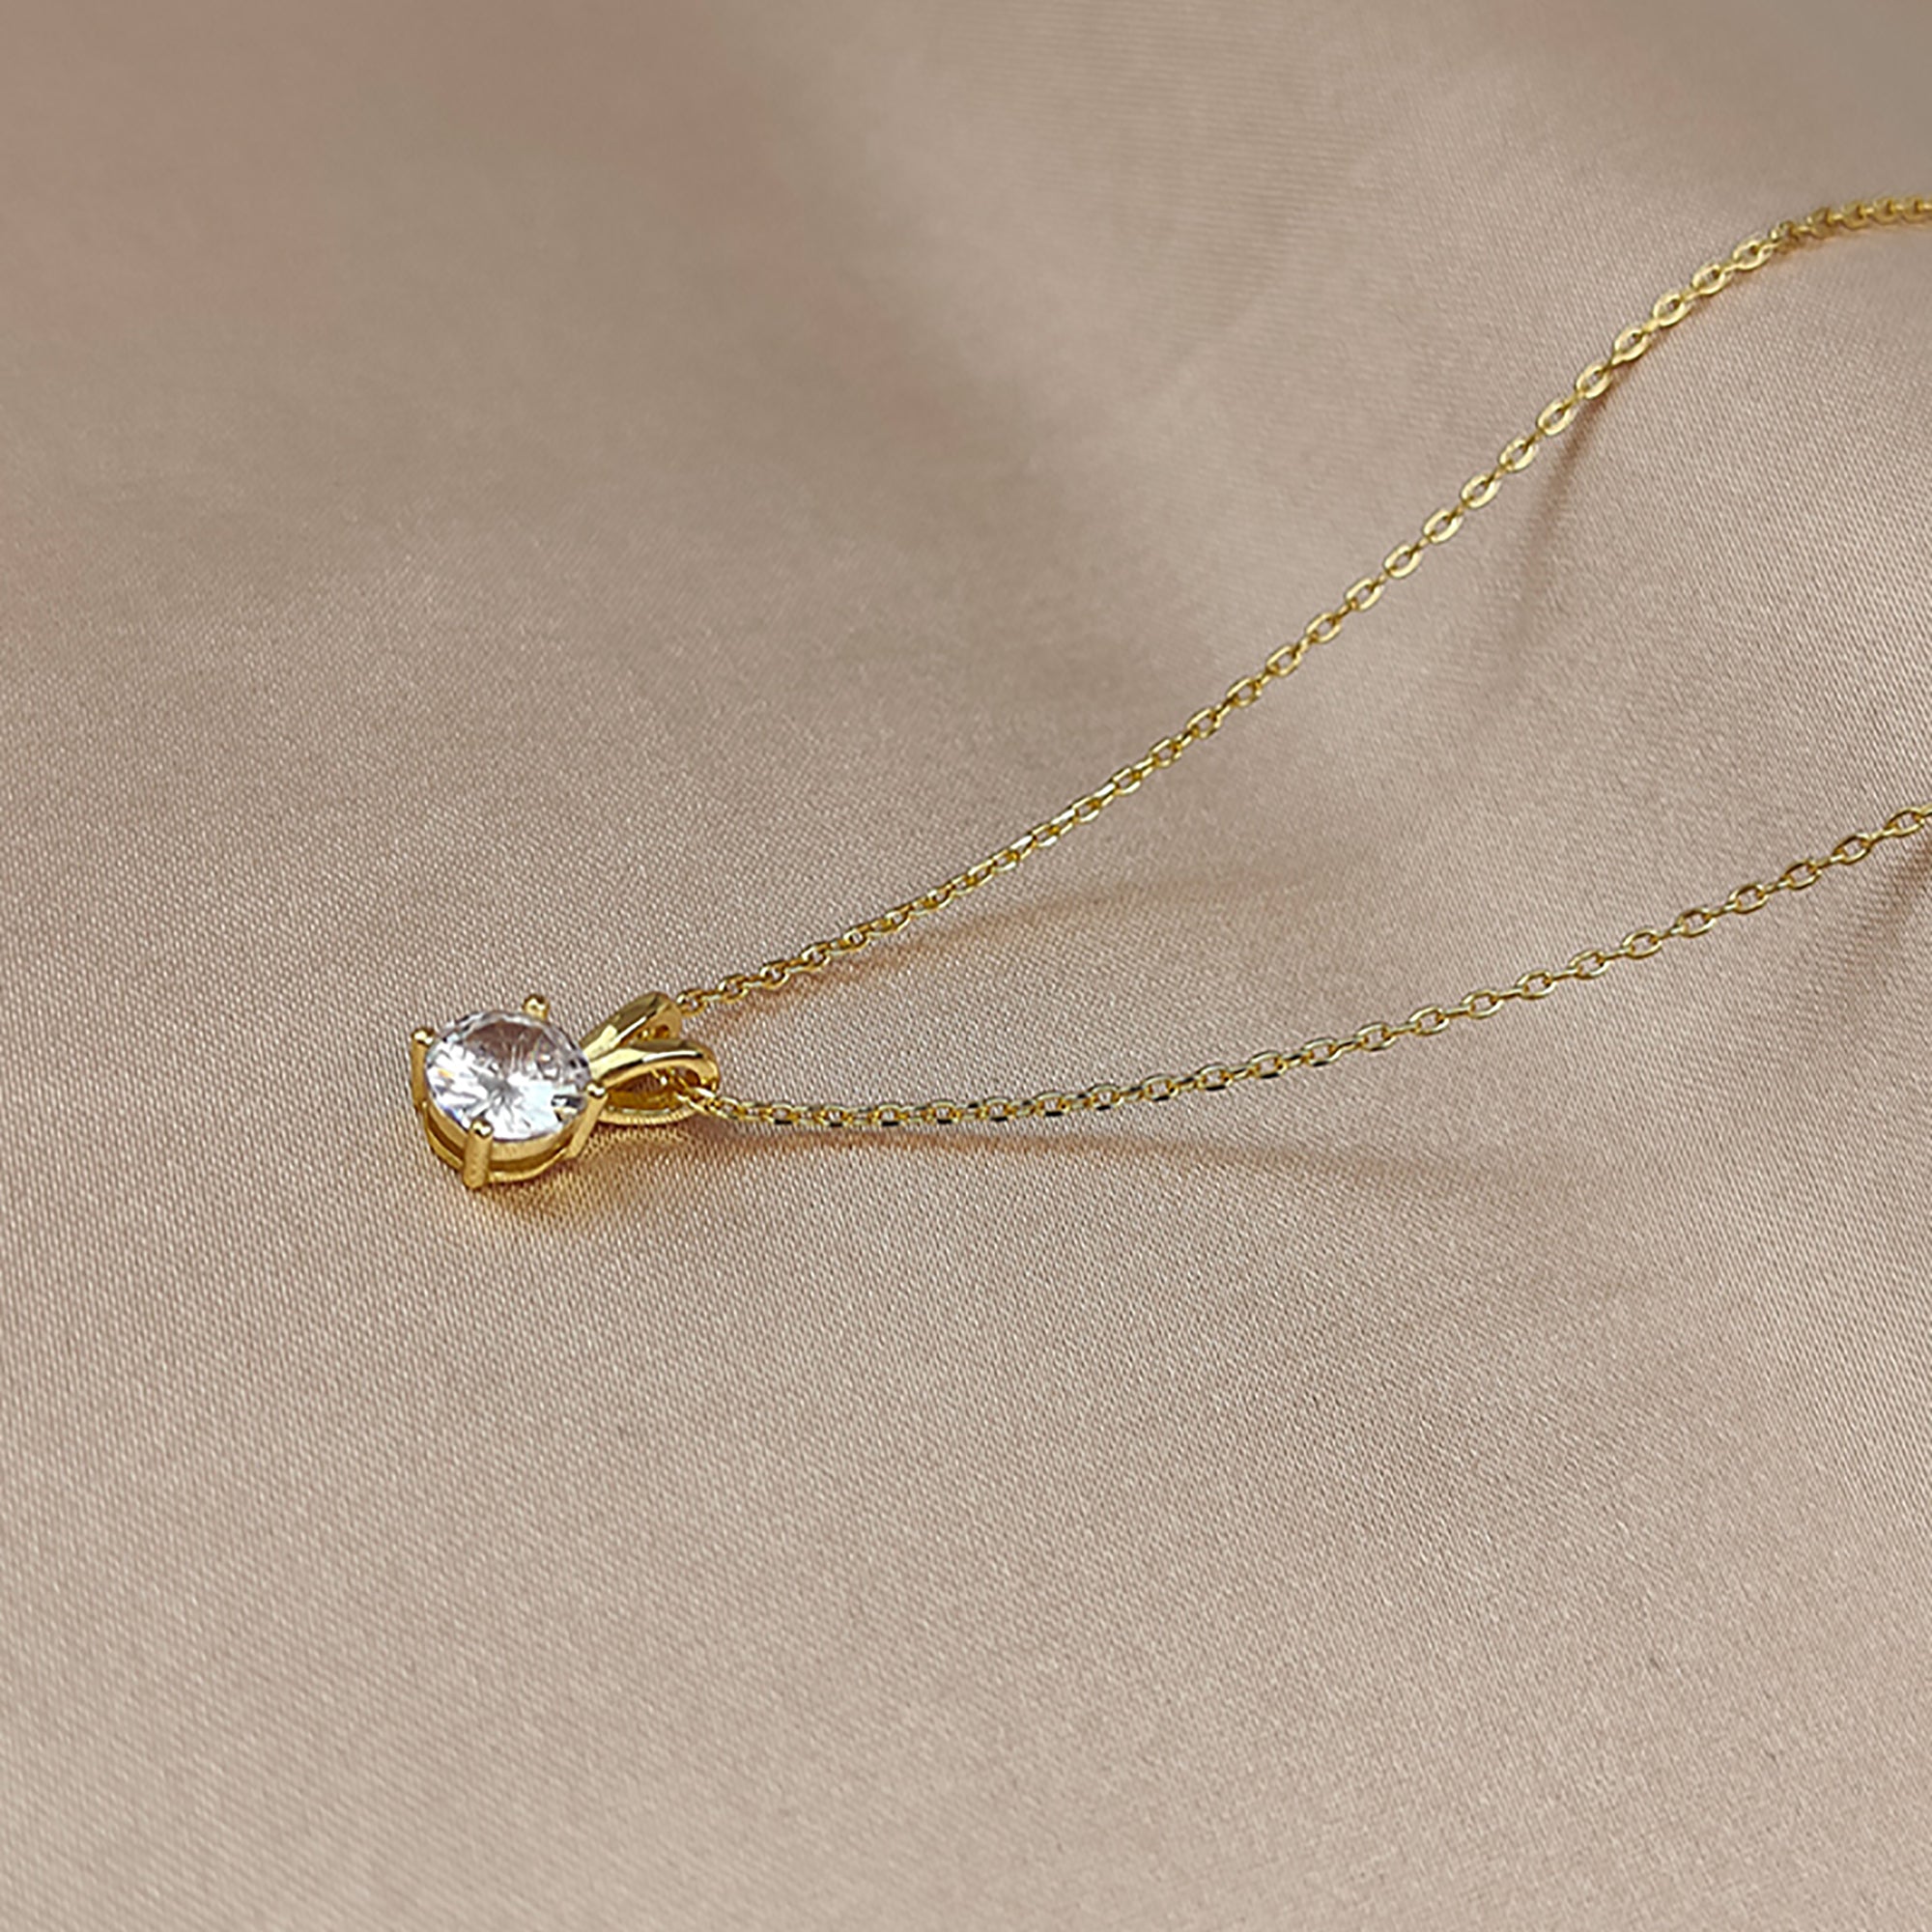 Gold Plated CZ Pendant Necklace Valentine Day Gift KOL / Youtuber / Celebrity / Fashion Icon styling